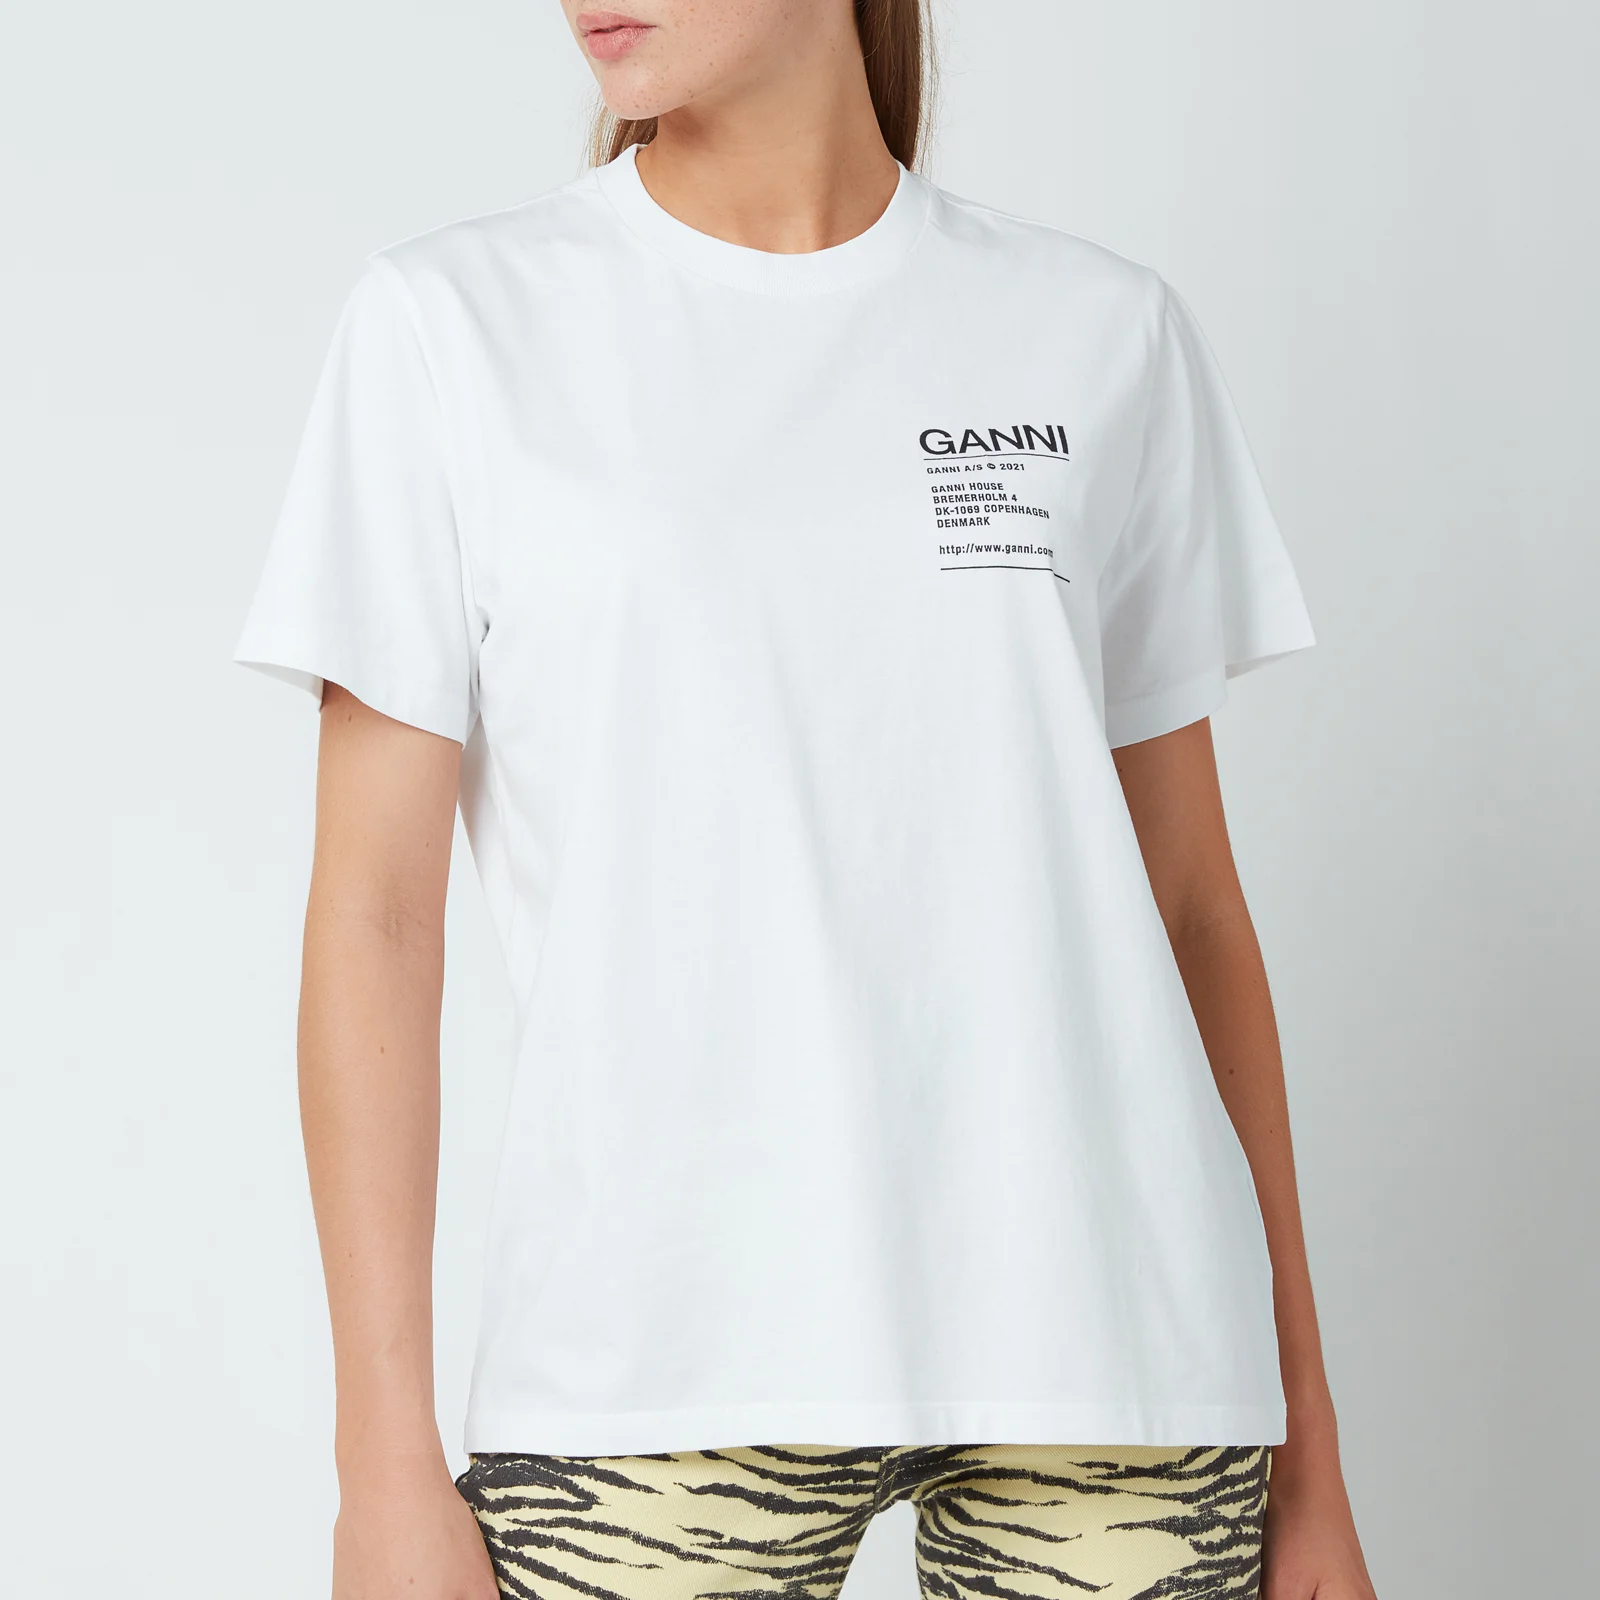 Ganni Women's Basic Cotton Jersey T-Shirt - White Image 1